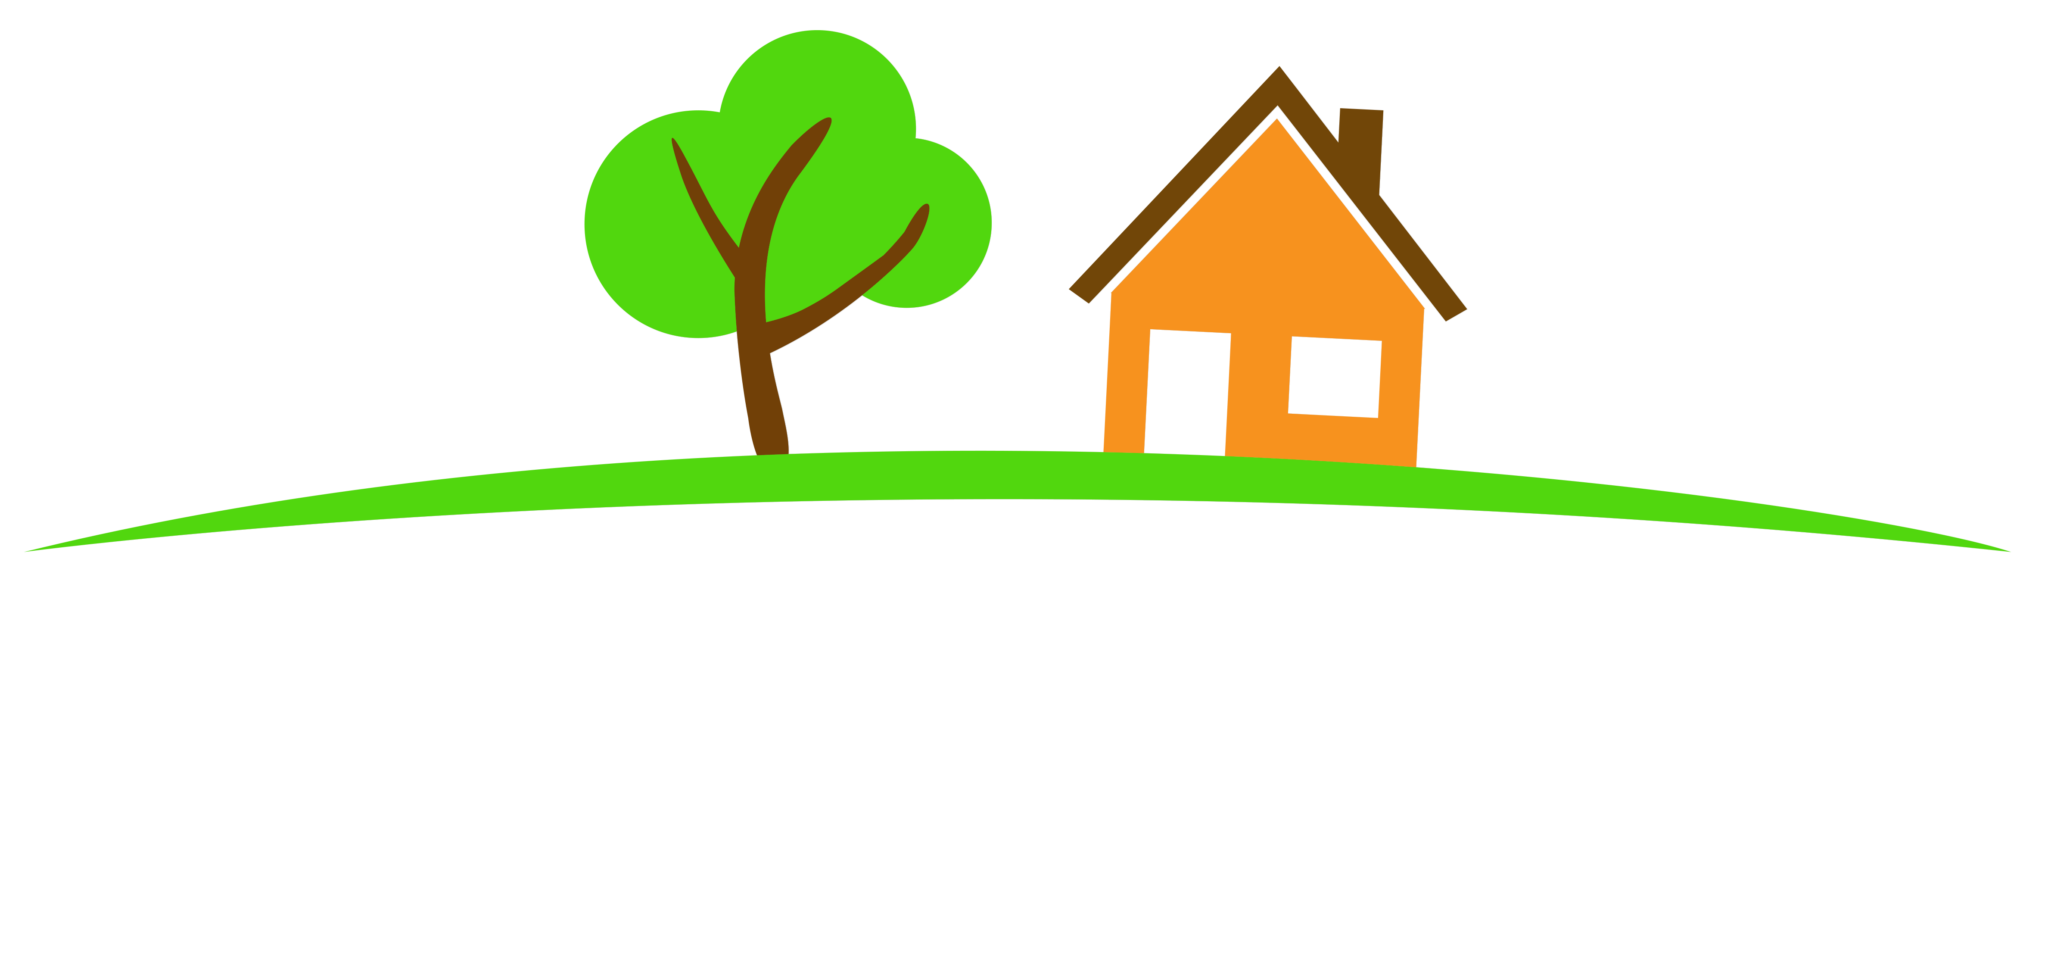 Woodhouse